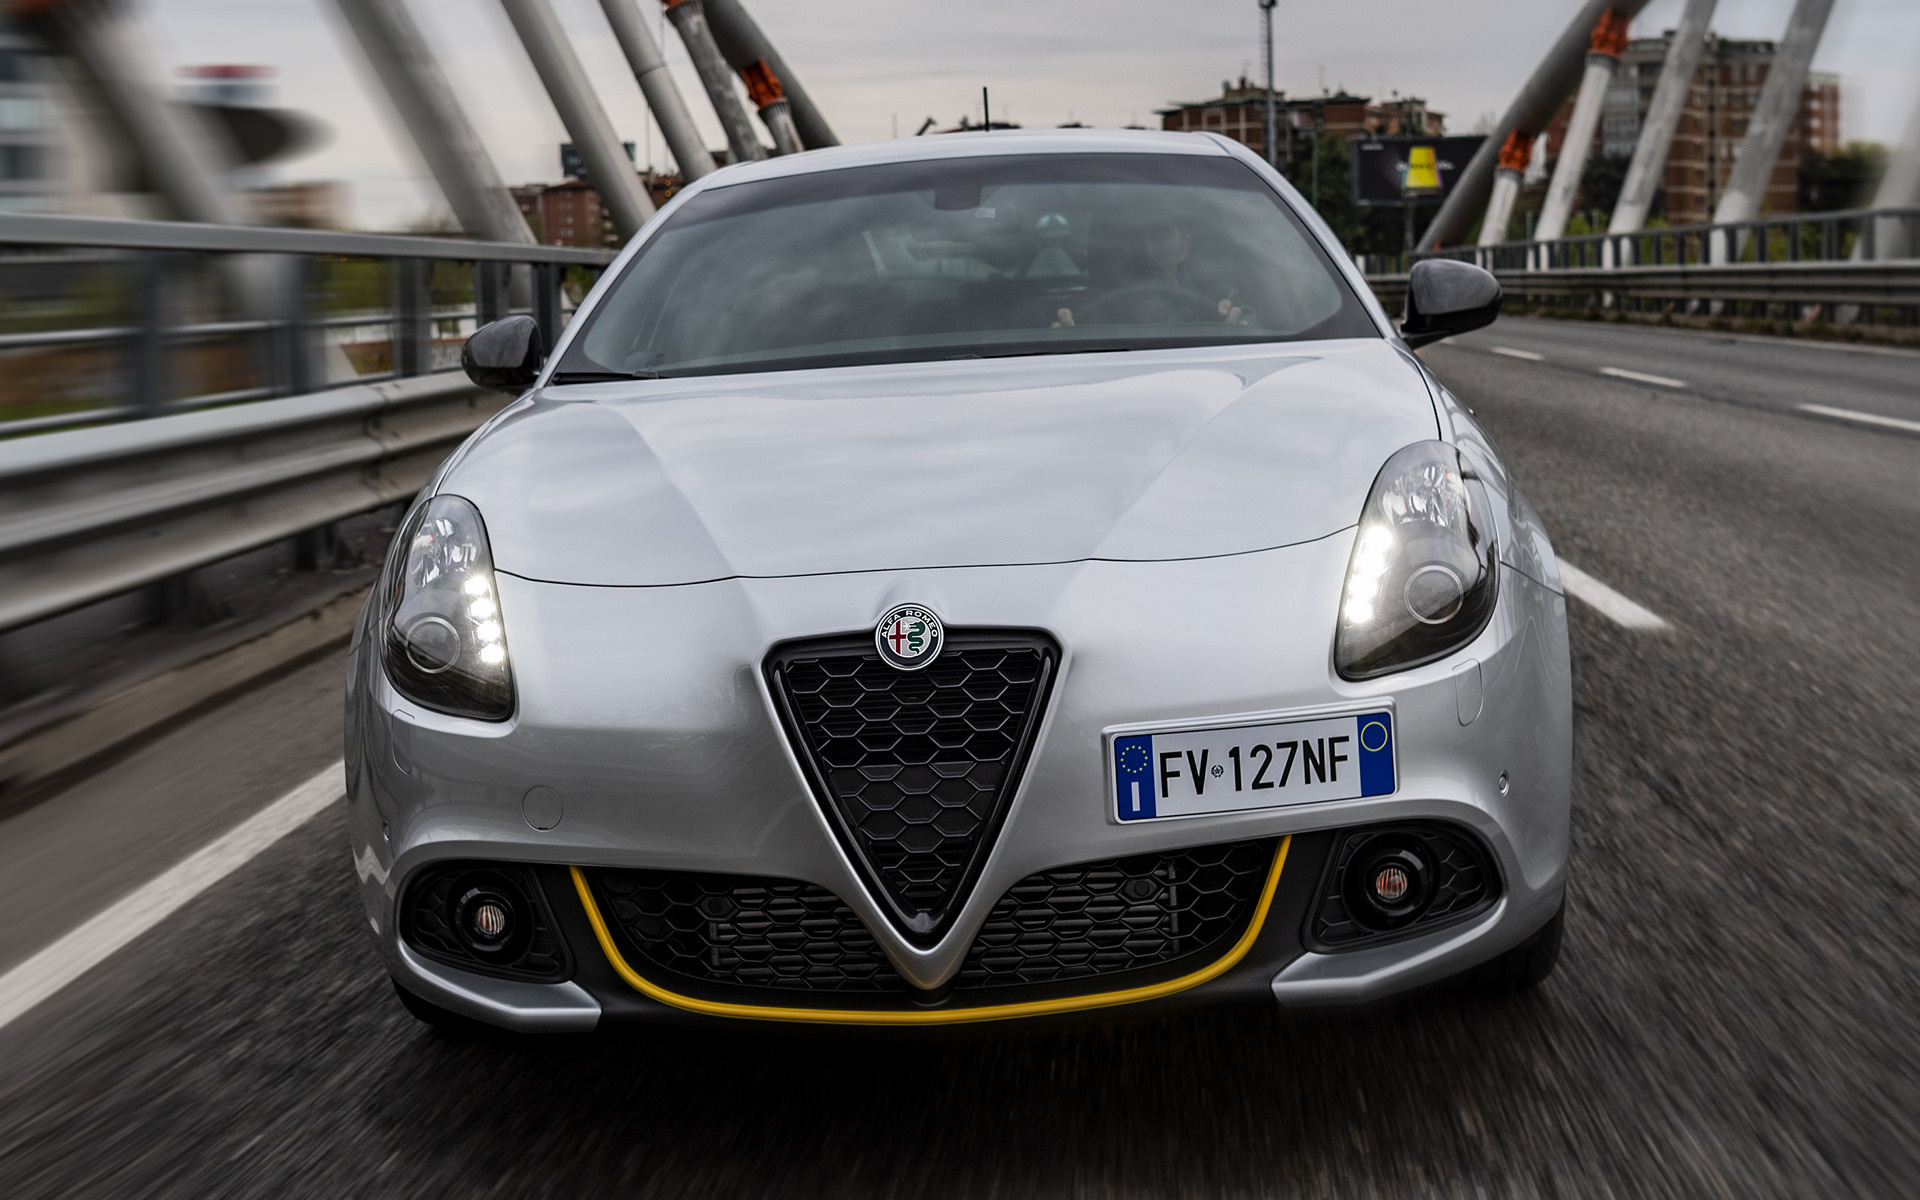 Alfa Romeo Giulietta Veloce Wallpapers